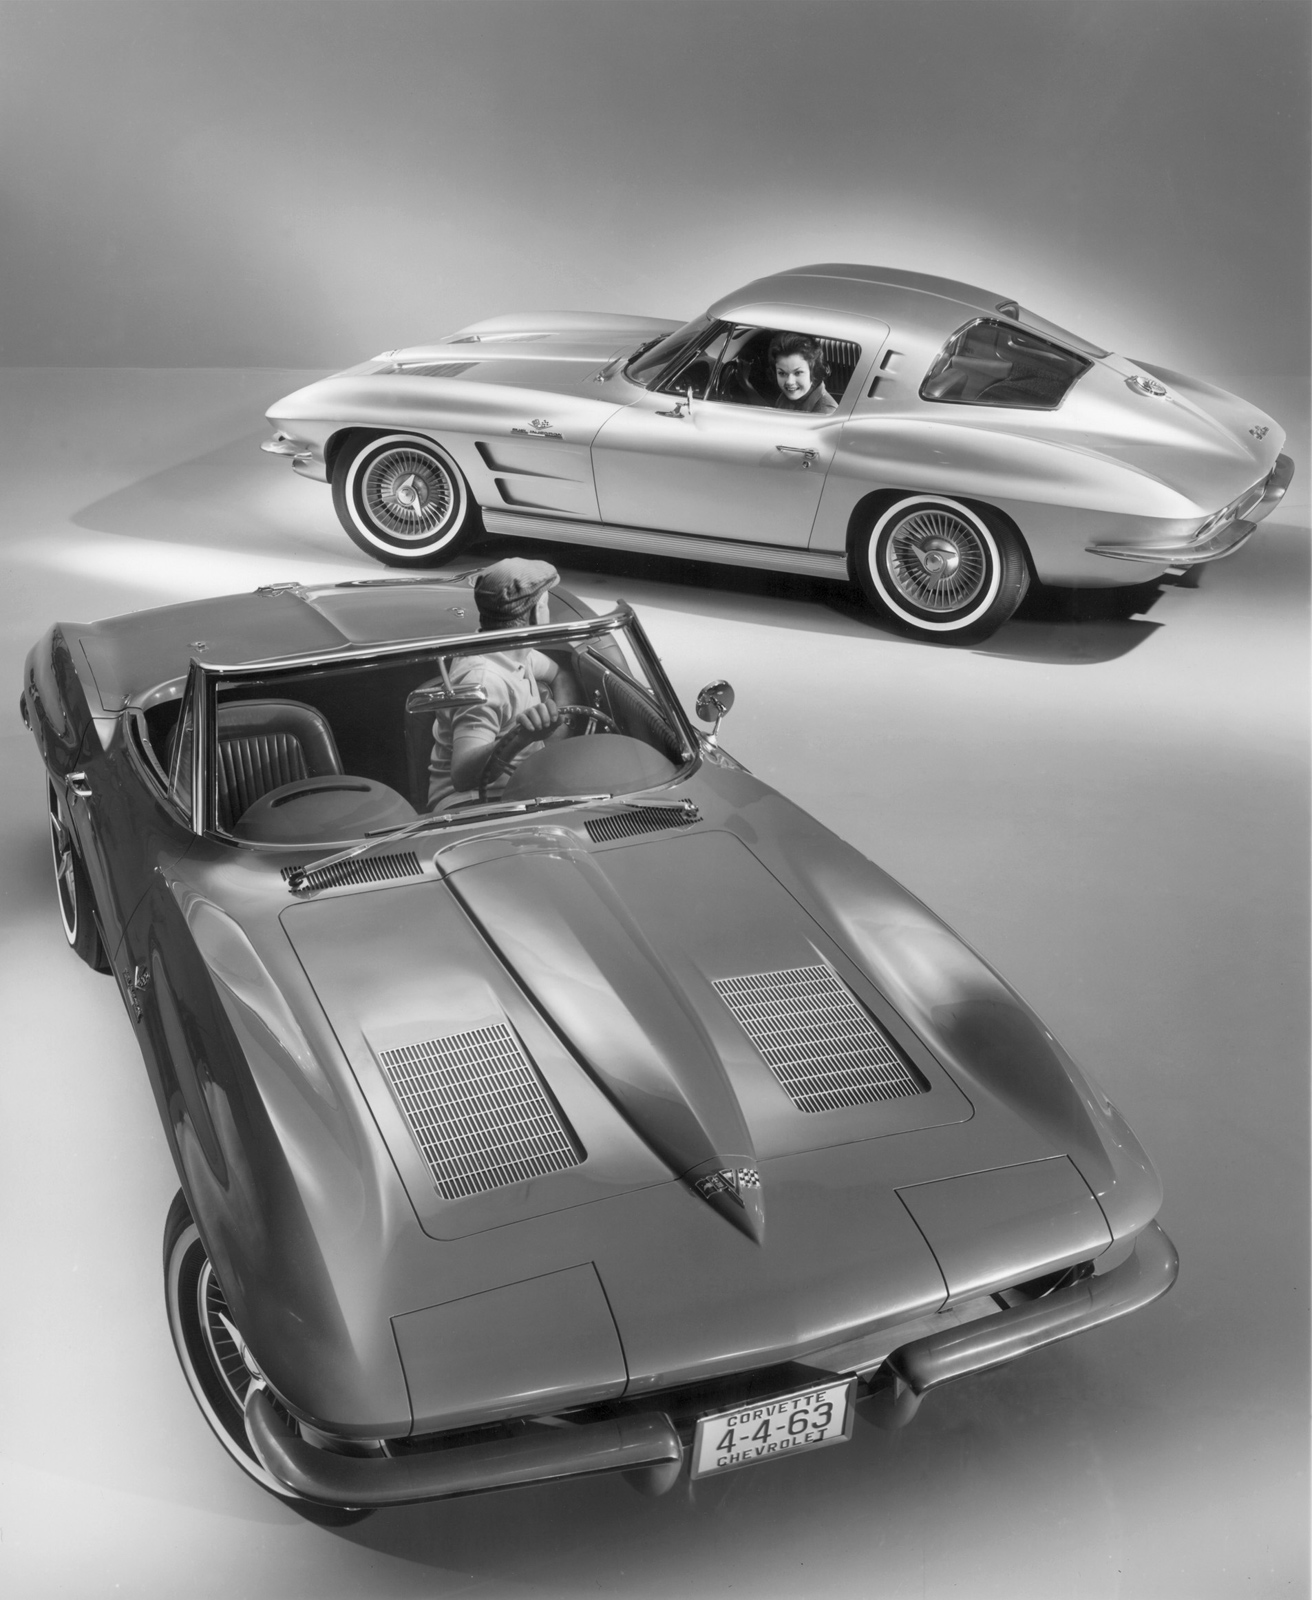 https://blogger.googleusercontent.com/img/b/R29vZ2xl/AVvXsEjmRXZ48vCAfRkpXfnYarbrkYOYFobsOkwJW2lbBIpe0LgU0UBp842ALNRx0r3ki2jzp7WXU2pqMfsLNGPOnXfhPbJ6mqeXutuPopyp9JrdVi_ANdAEsl2QGVznTI8peXldqUoWNgaGfYE/s1600/Corvette-C2-1963.jpg